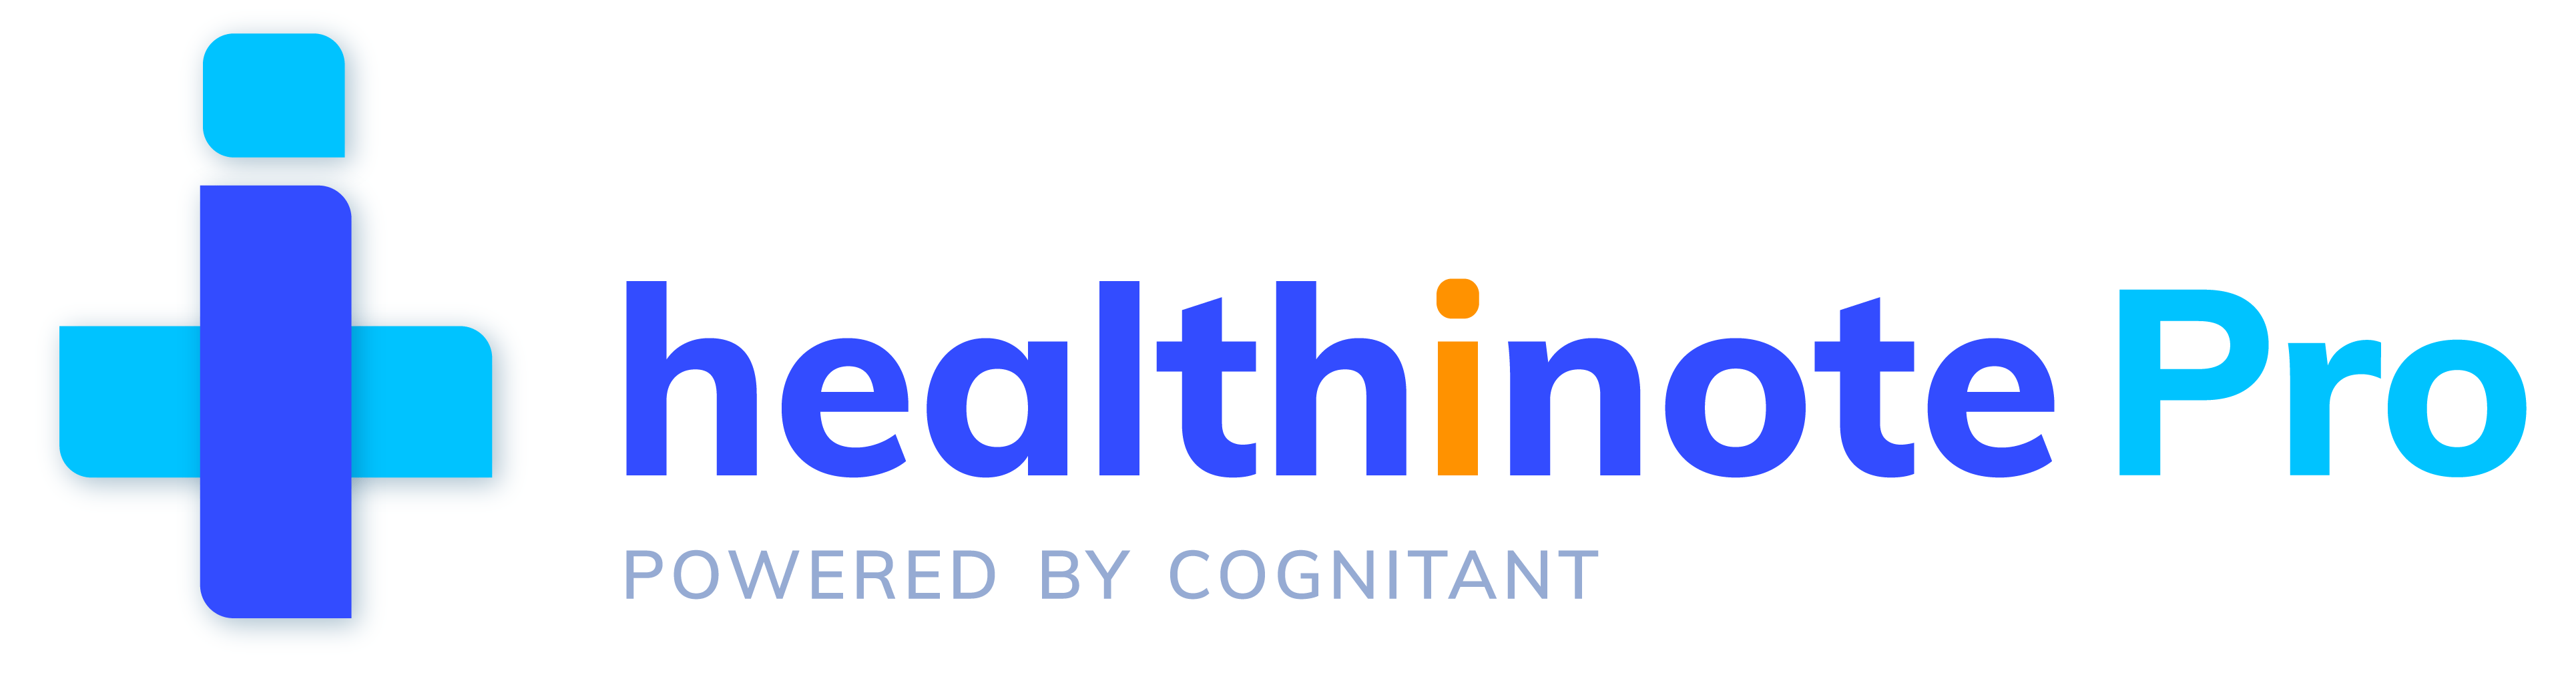 Healthinote Pro Banner